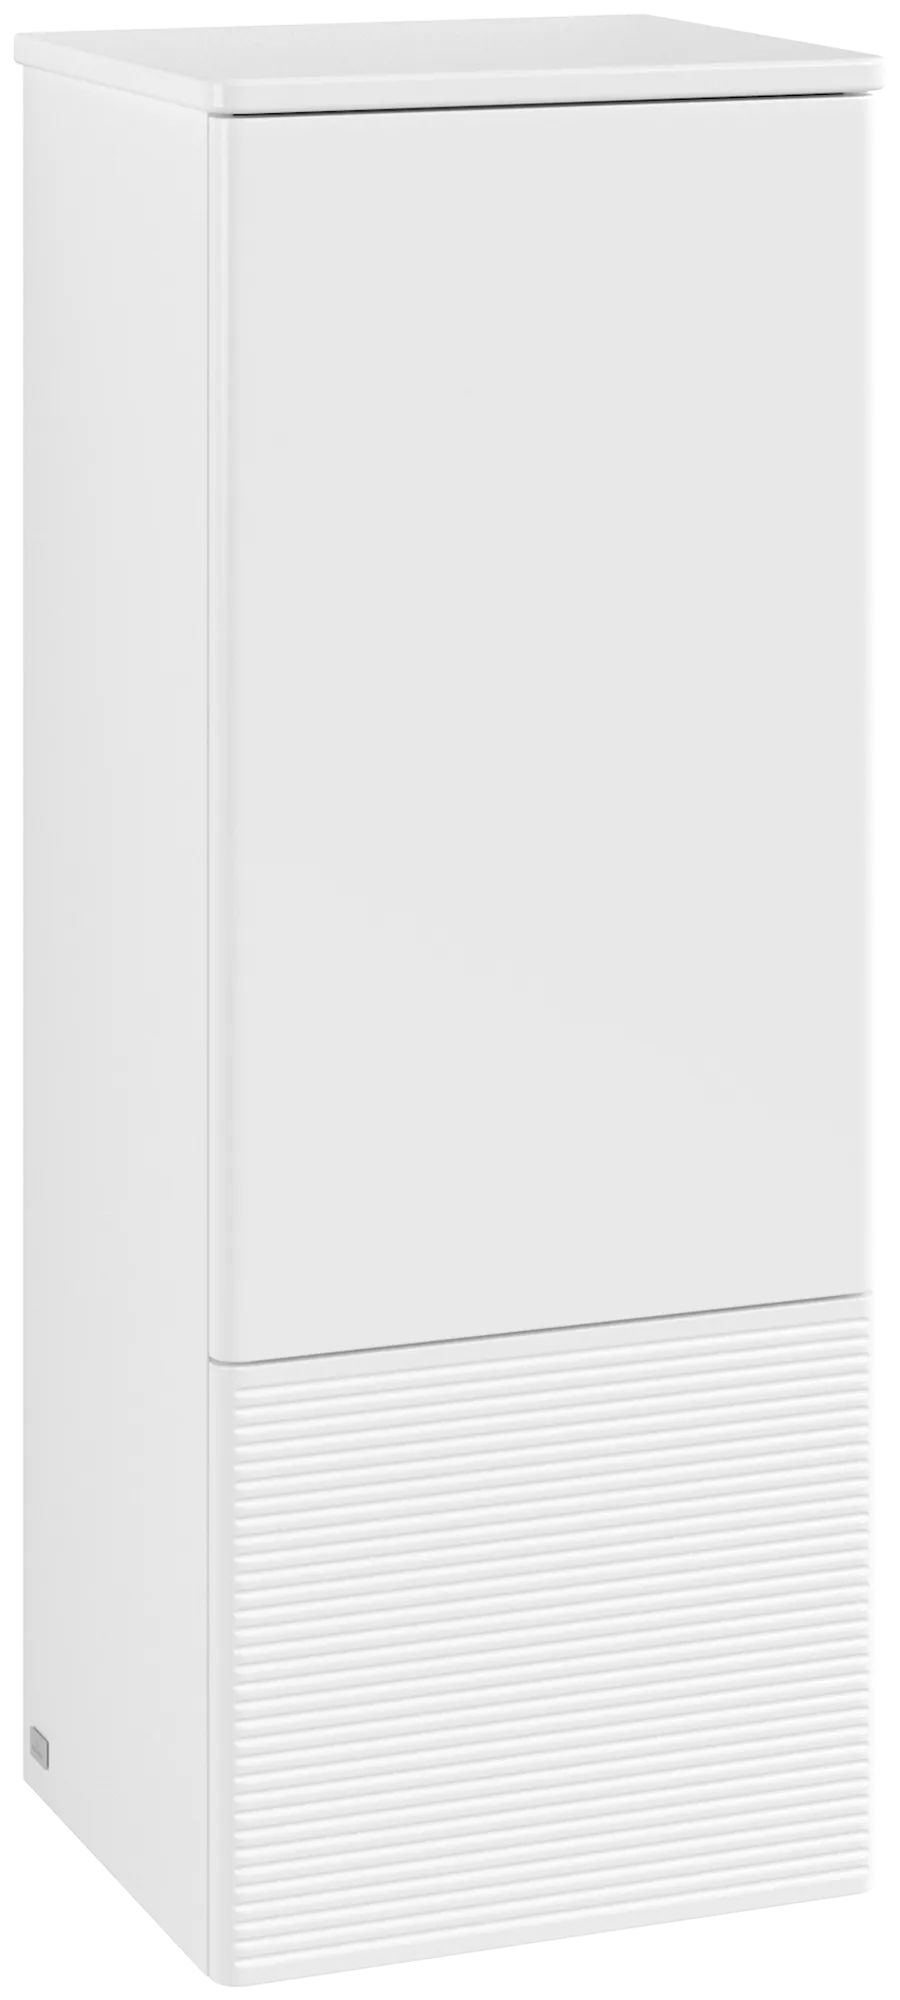 Obrázek VILLEROY BOCH Antao Medium-height cabinet, 1 door, 414 x 1039 x 356 mm, Front with grain texture, White Matt Lacquer / White Matt Lacquer #K44100MT